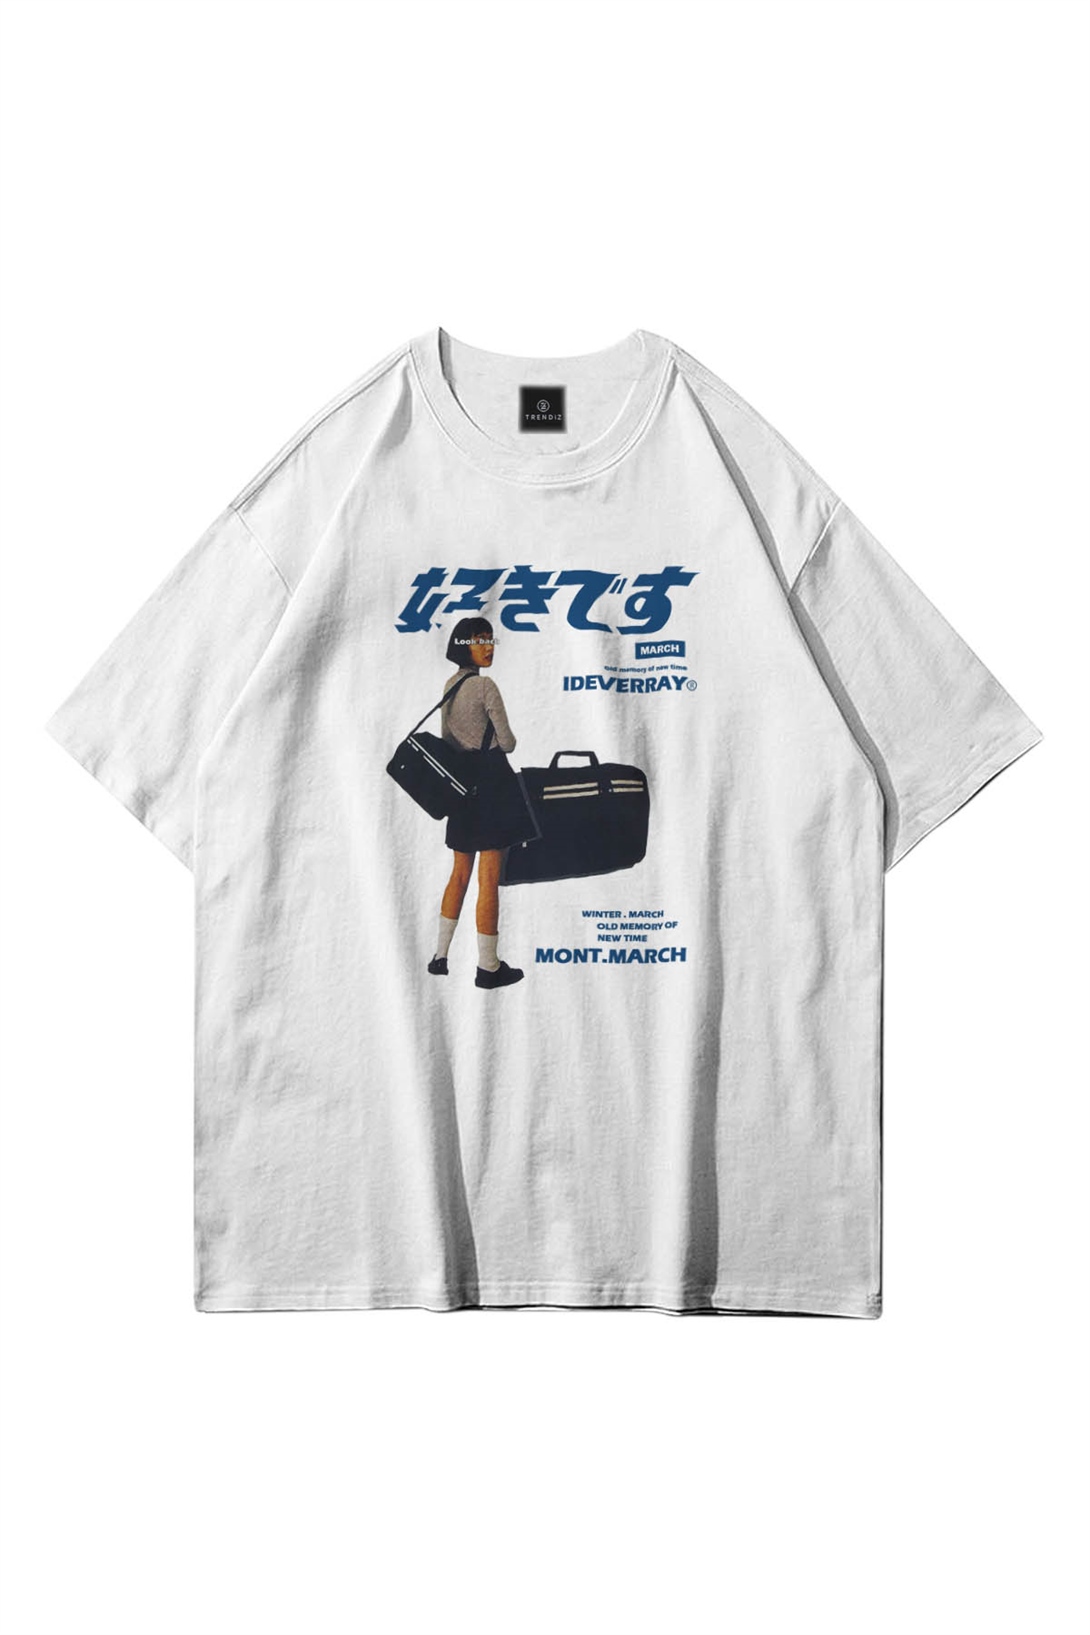 Trendiz Unisex Harajuku Girl Beyaz Tshirt